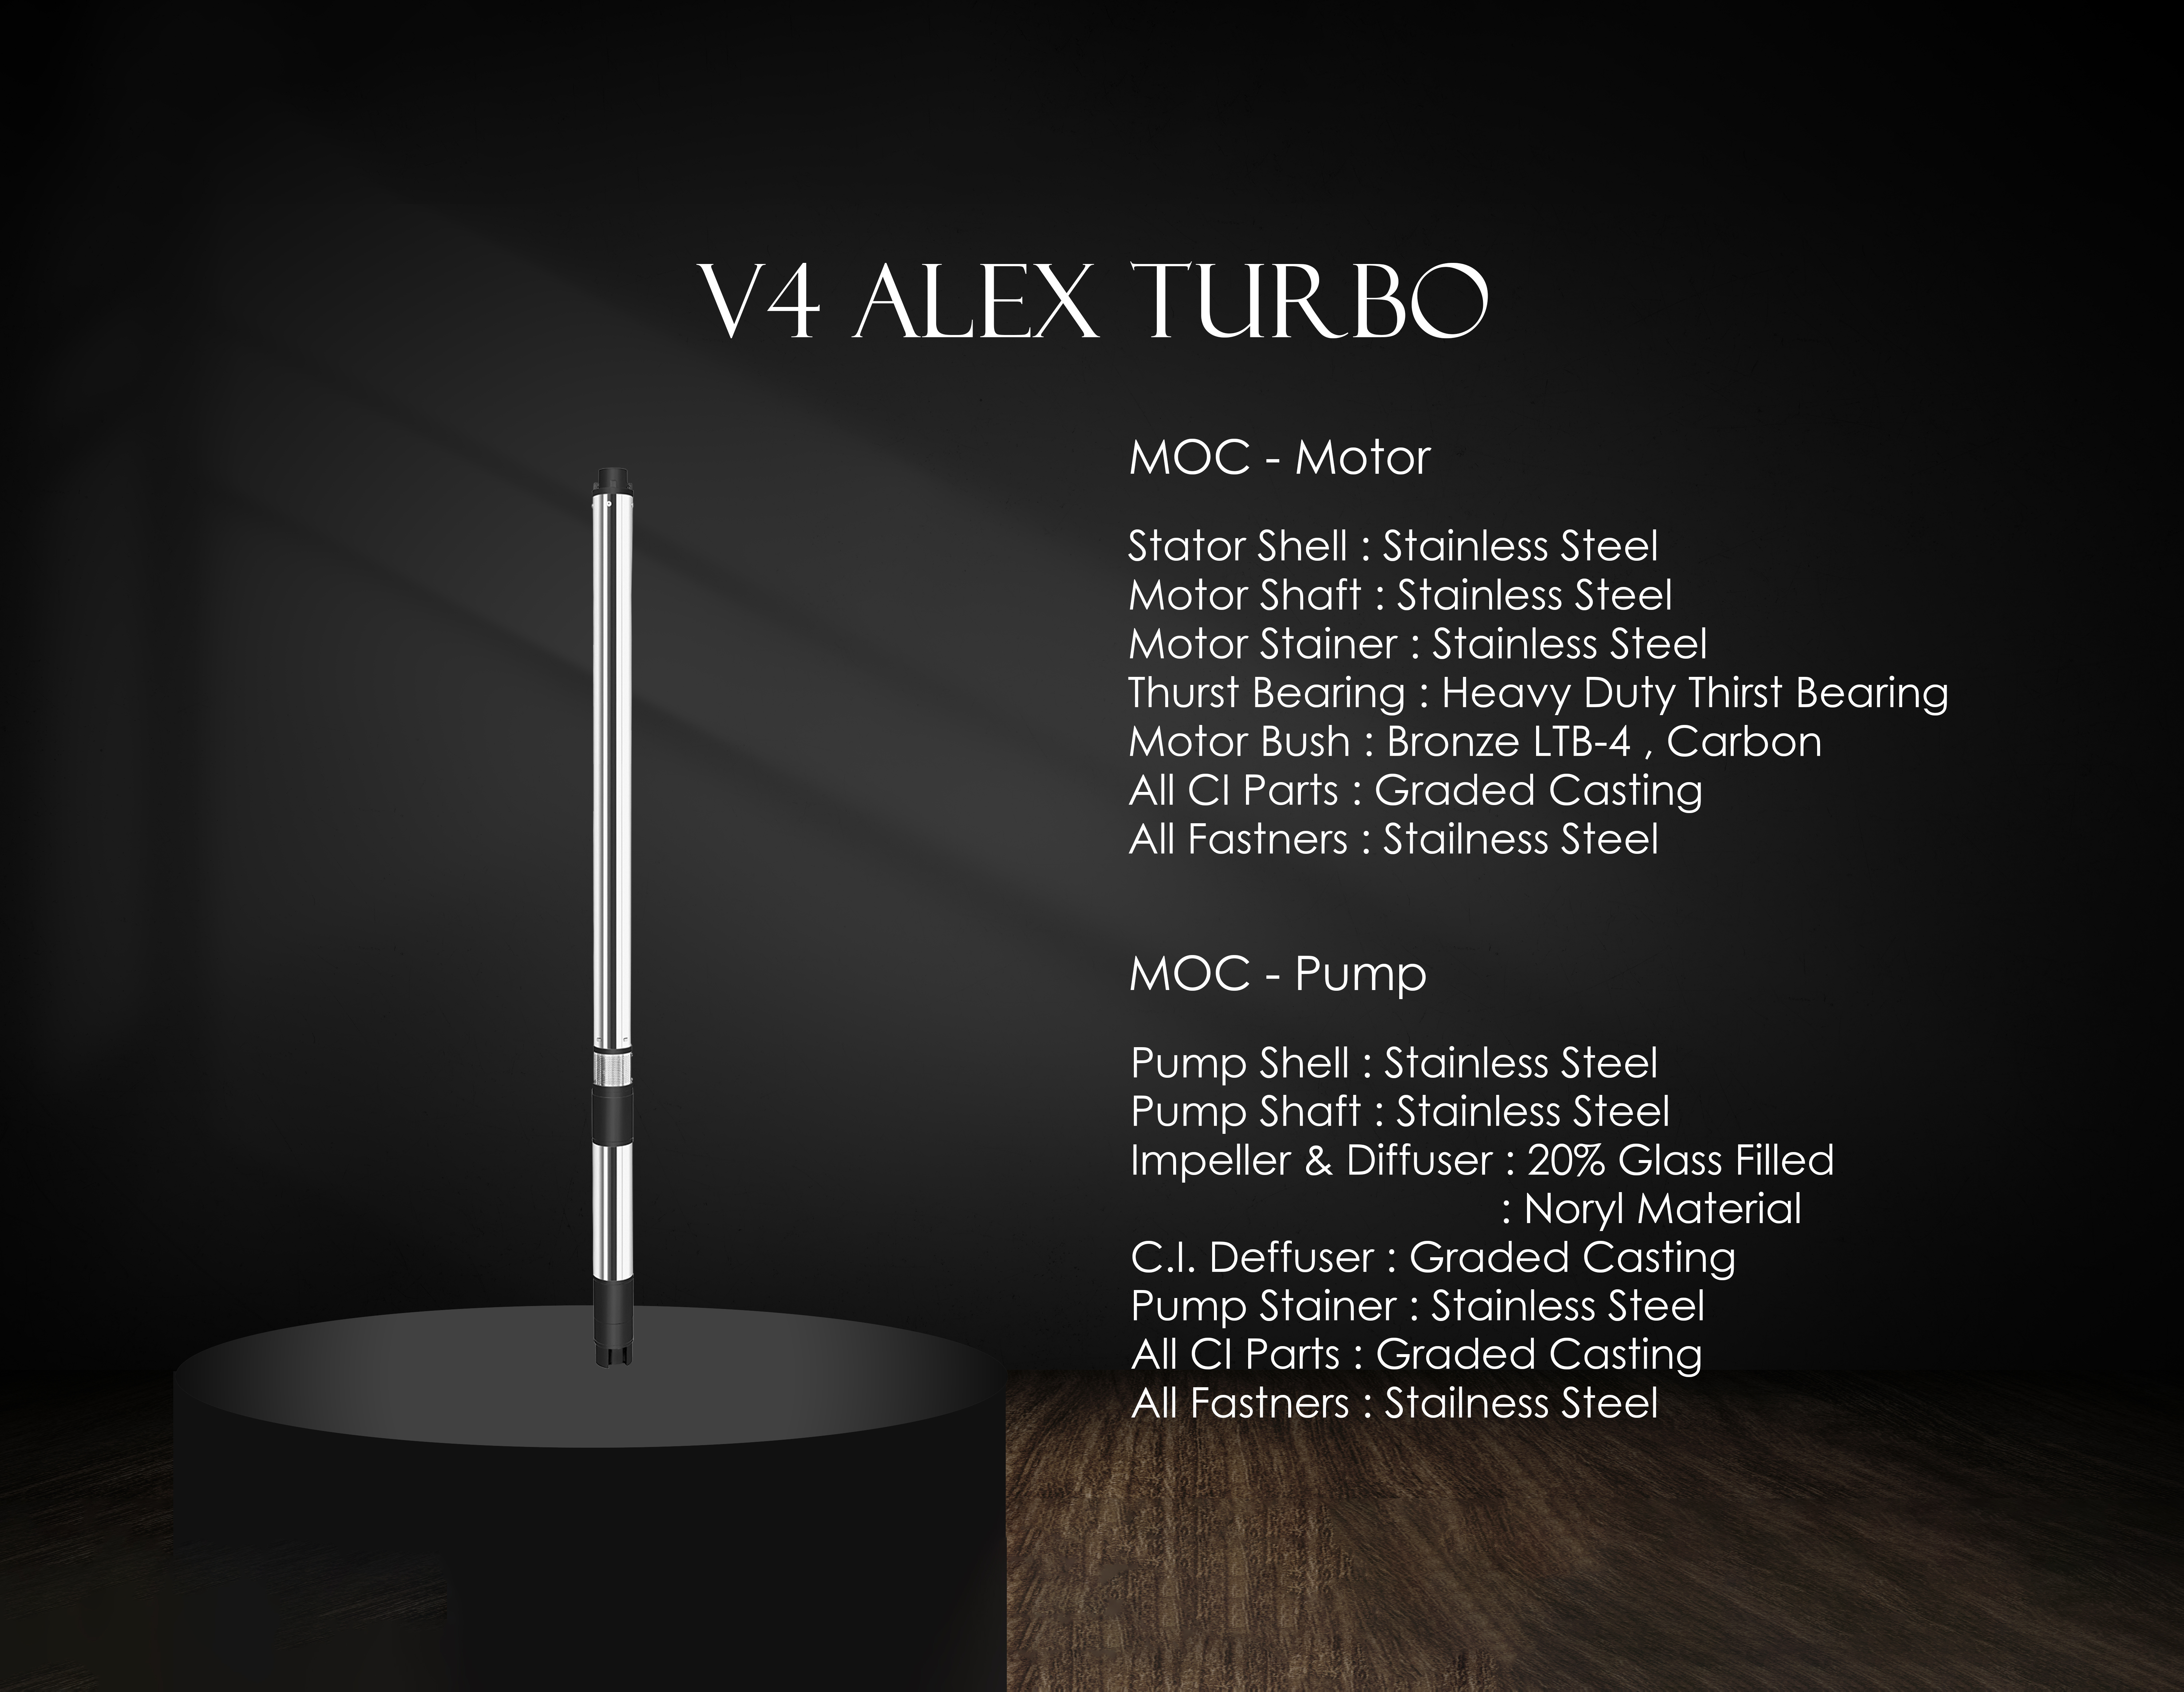 V4 1.5 HP X 20 STG Alex Turbo (Out-1.25") (S/T) Prithvi